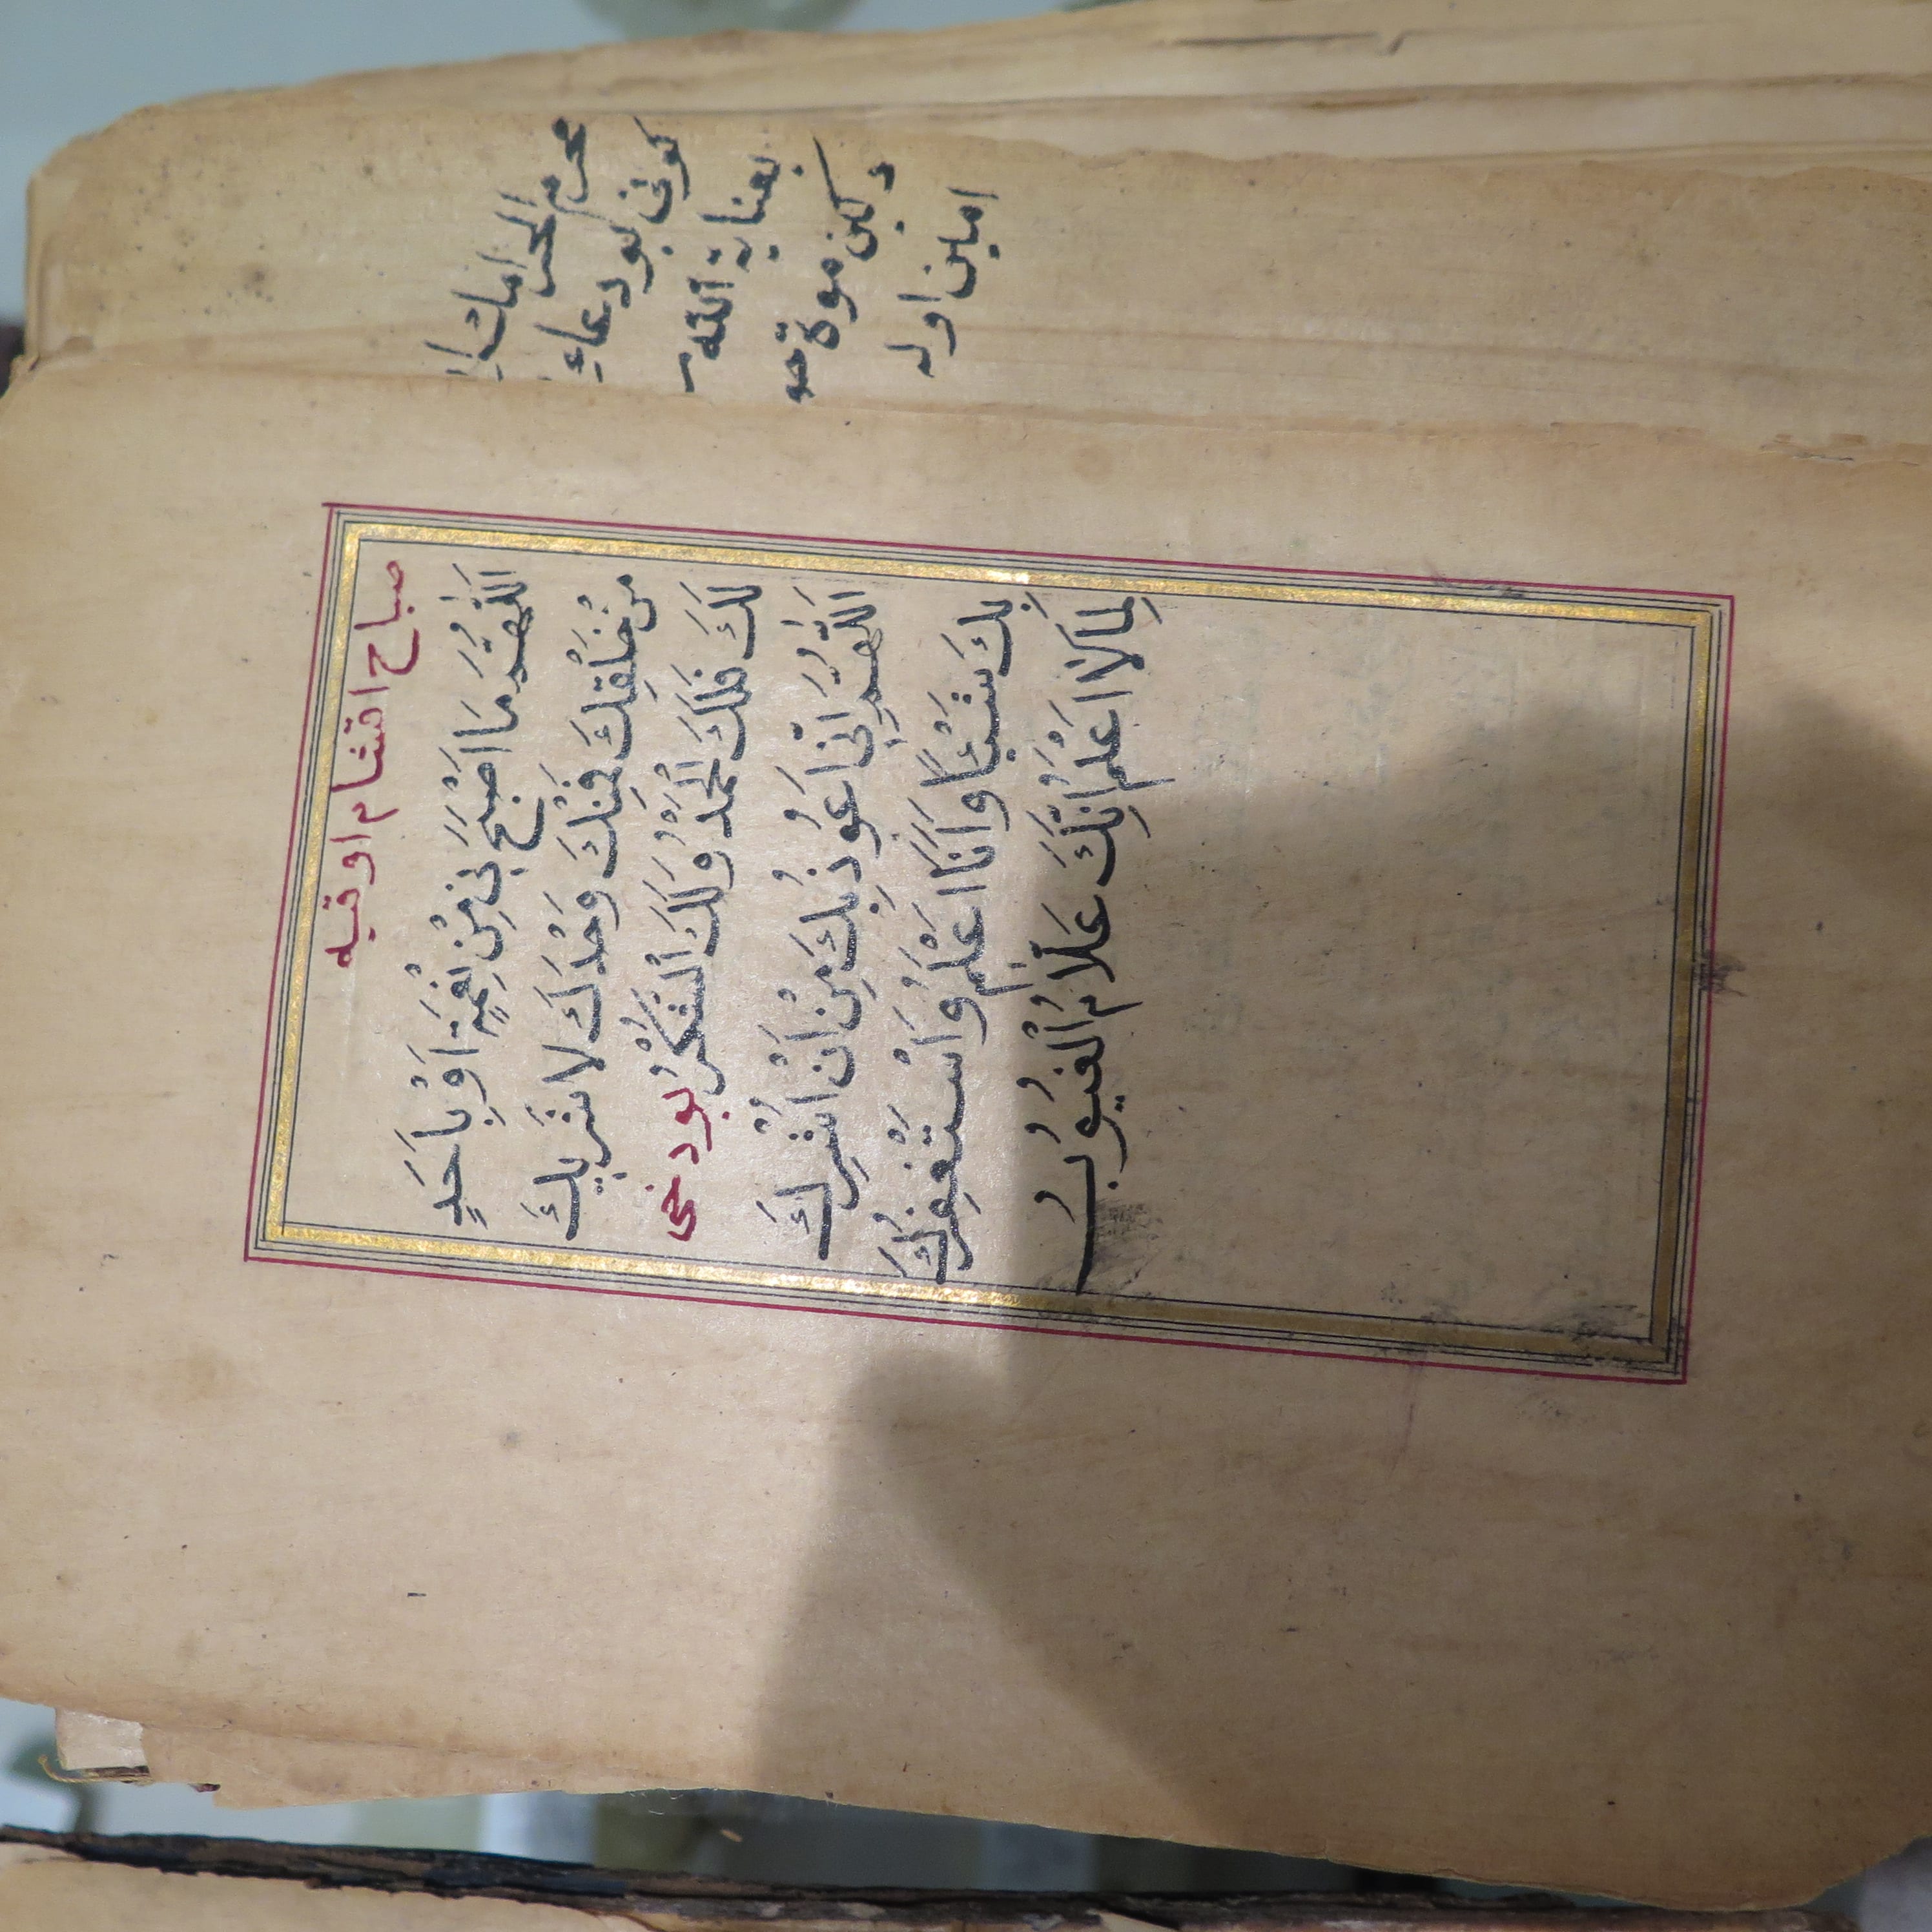 Lot 171: Persian 19th century Koran with Illuminated Calligraphy in original binding